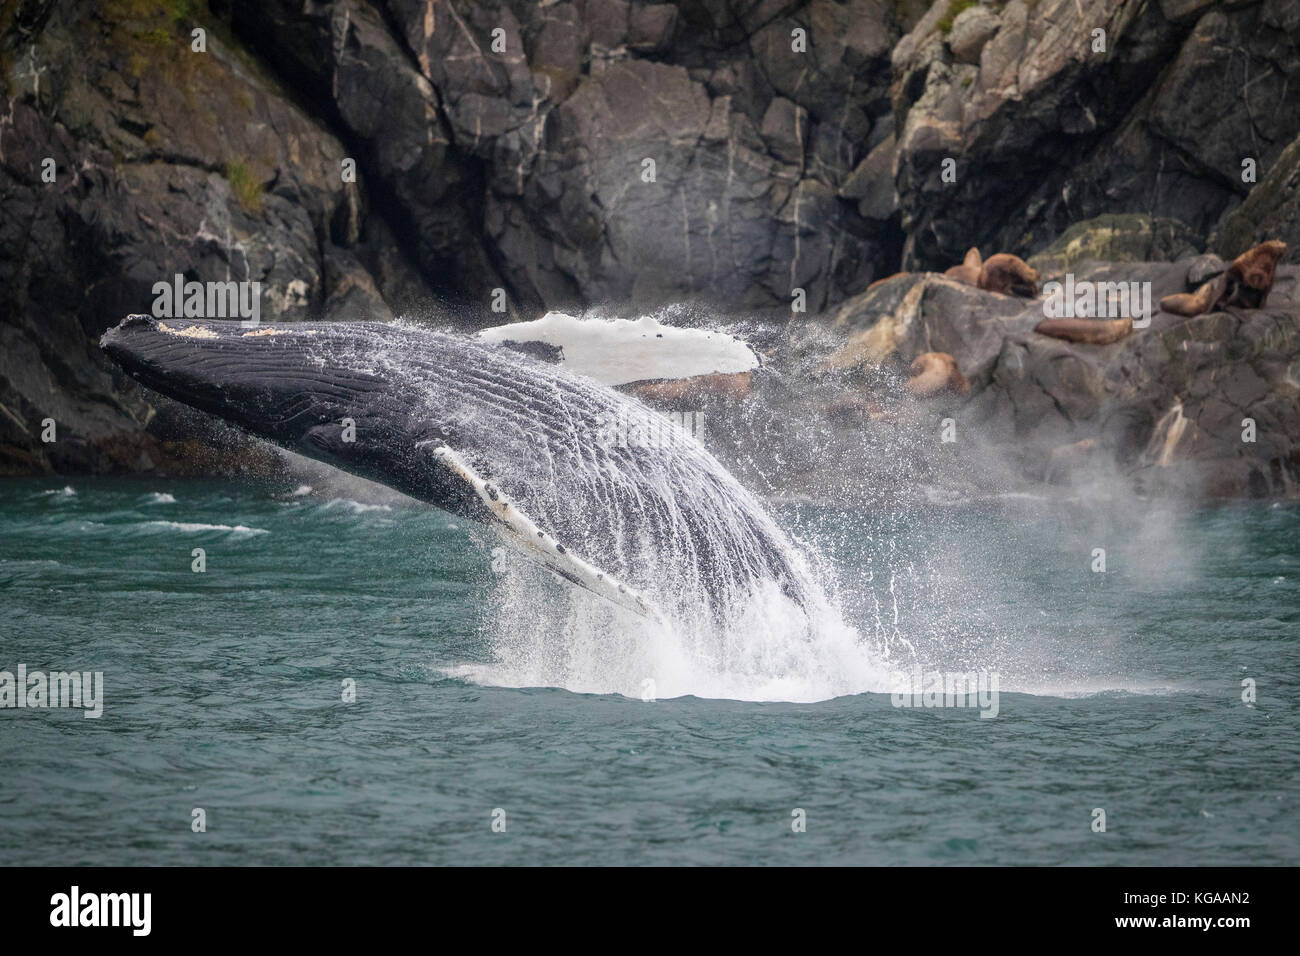 Breaching Humpback Whale, Alaska Stock Photo